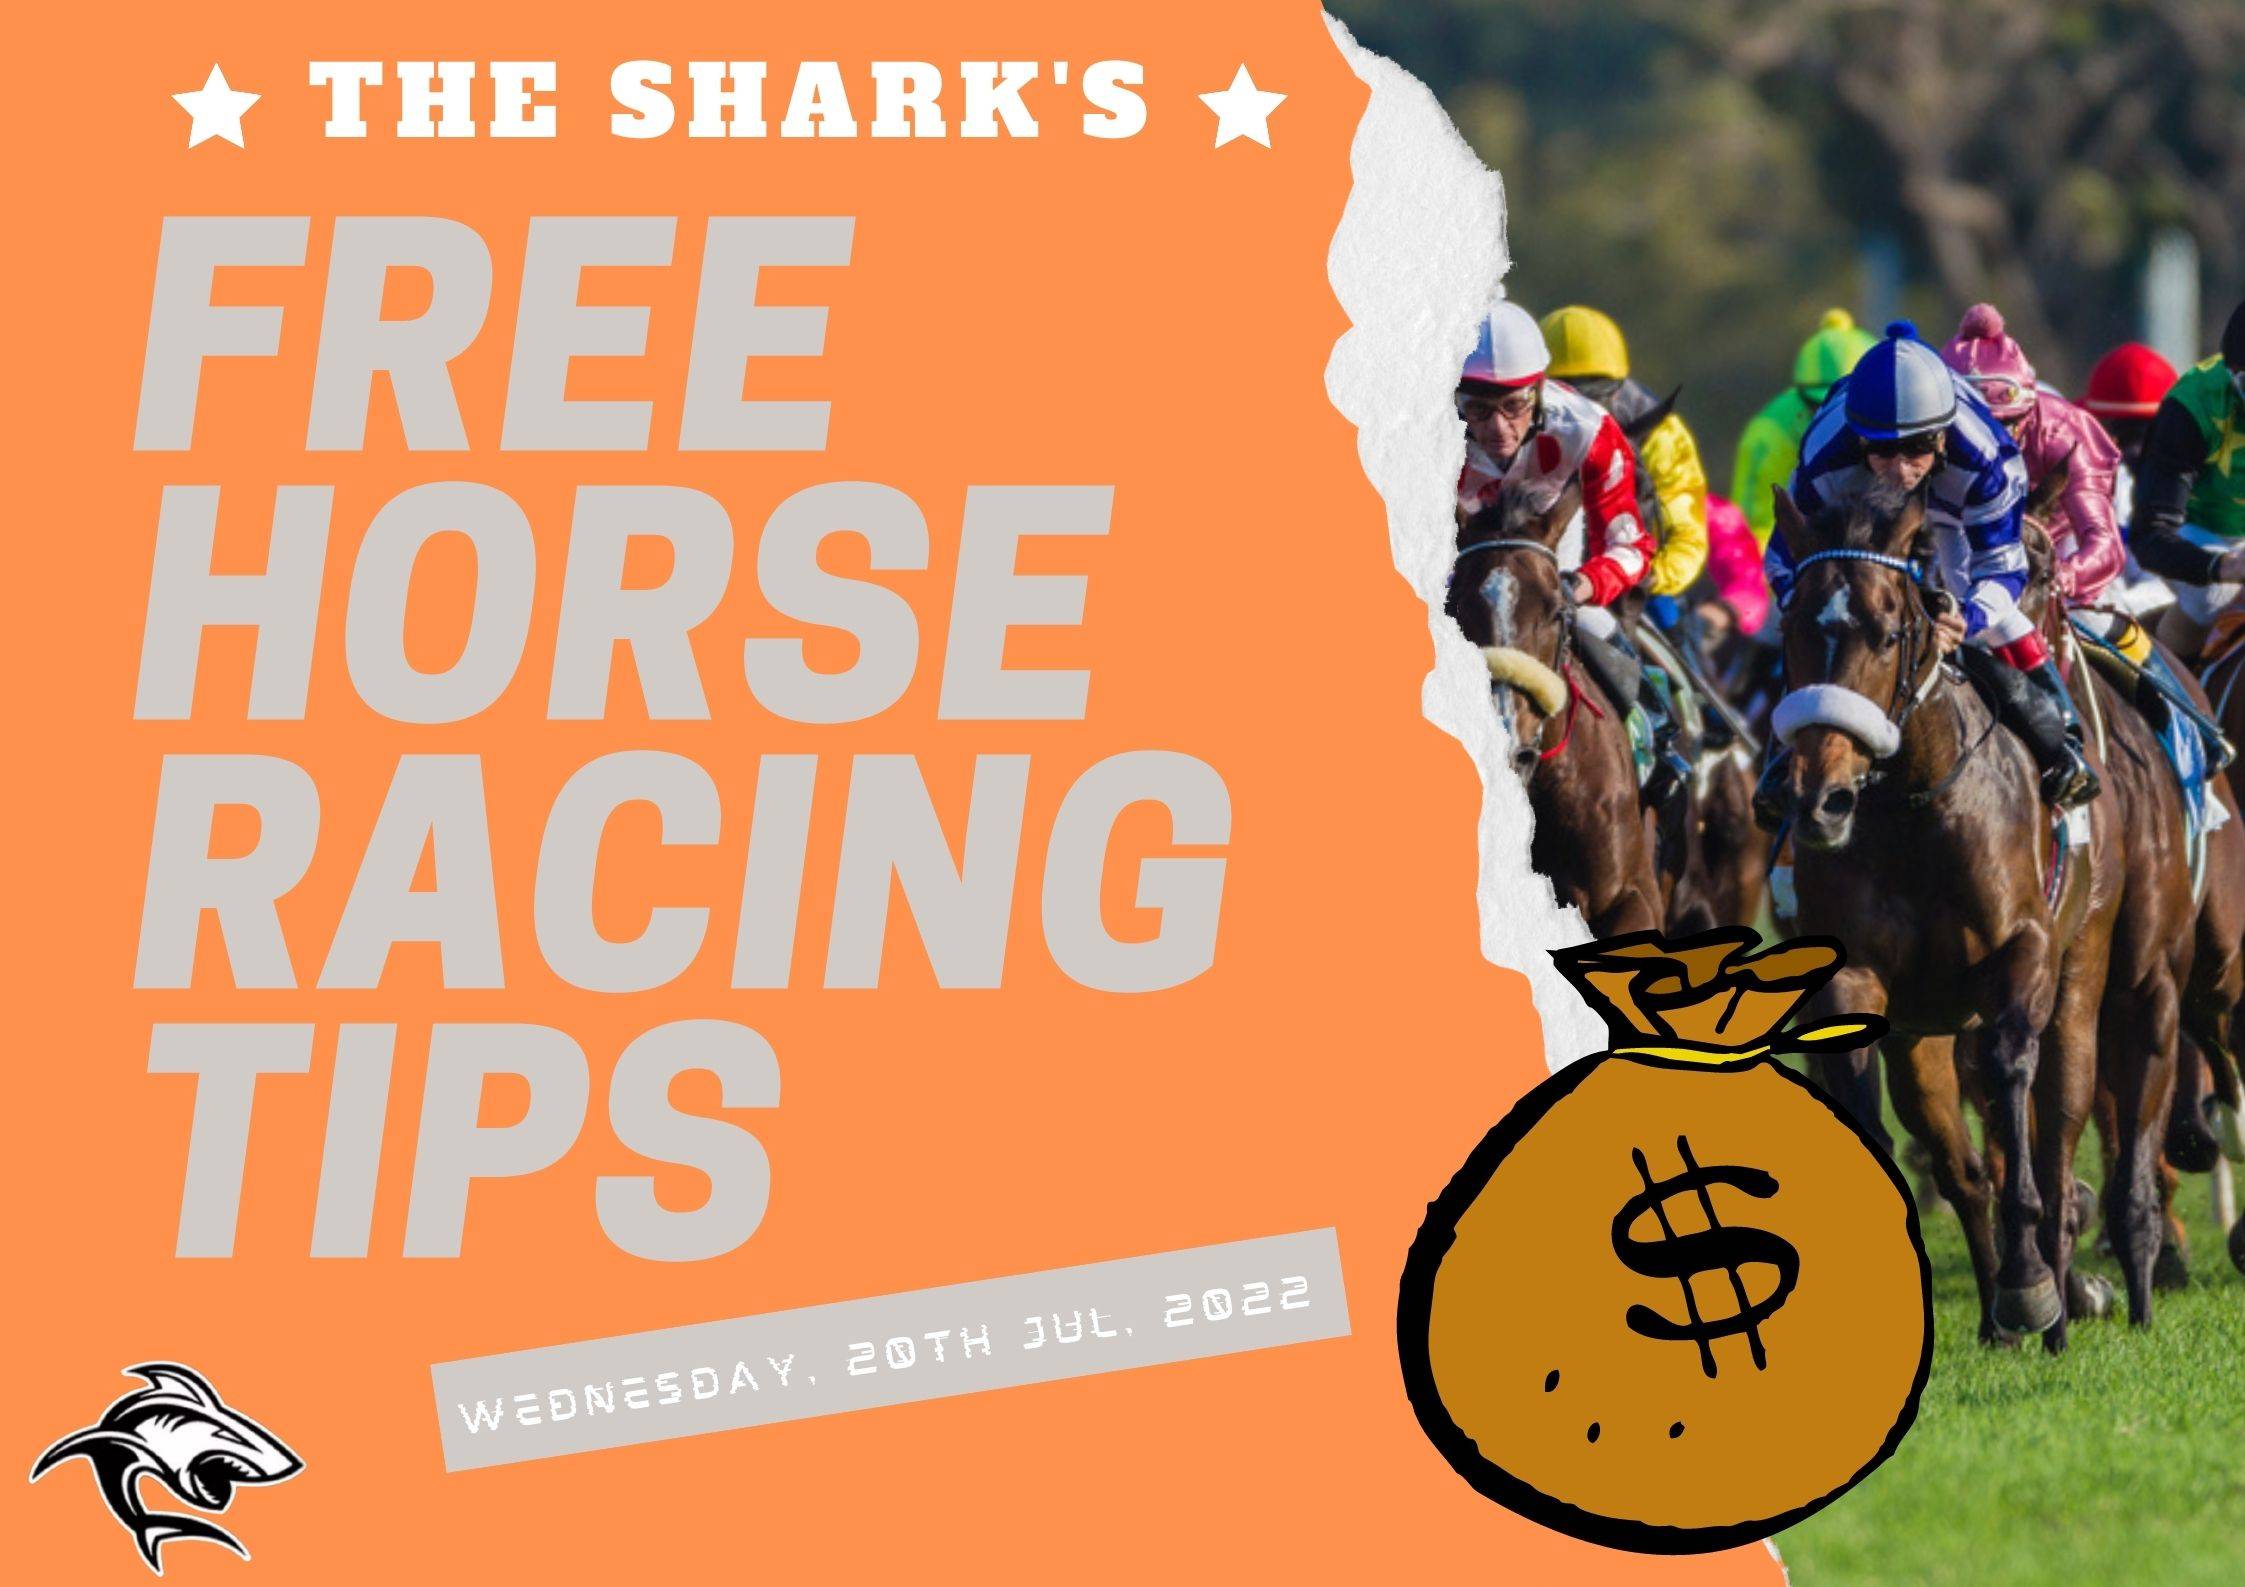 Free Horse Racing Tips - 20th Jul